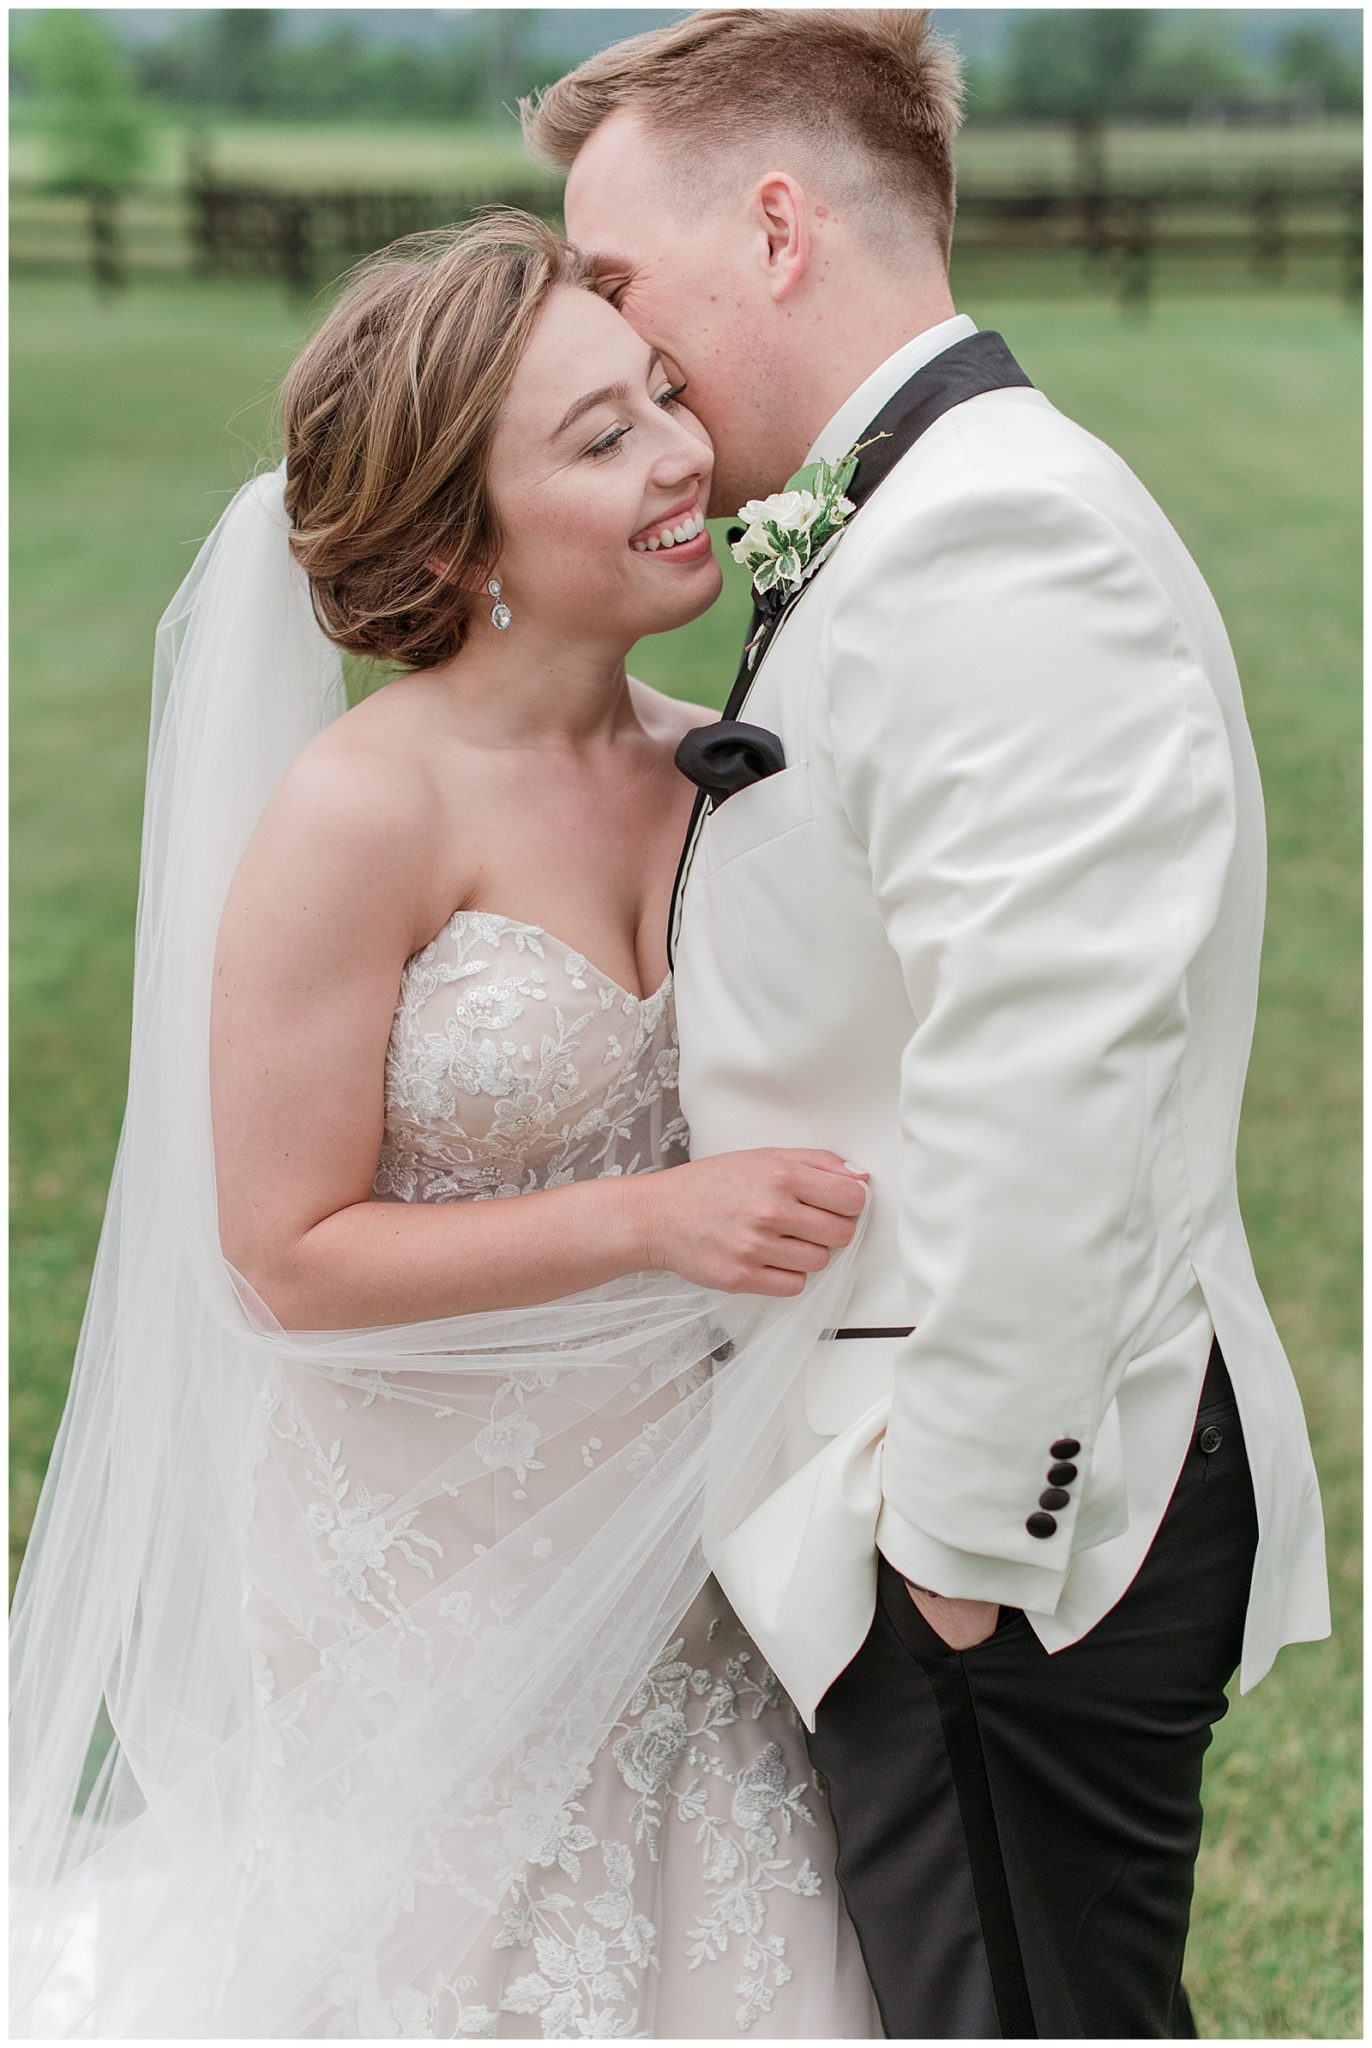 Southern Weddings, King Family Vineyard Wedding, Charlottesville Wedding Photographer, Kimberly F. Denn photo